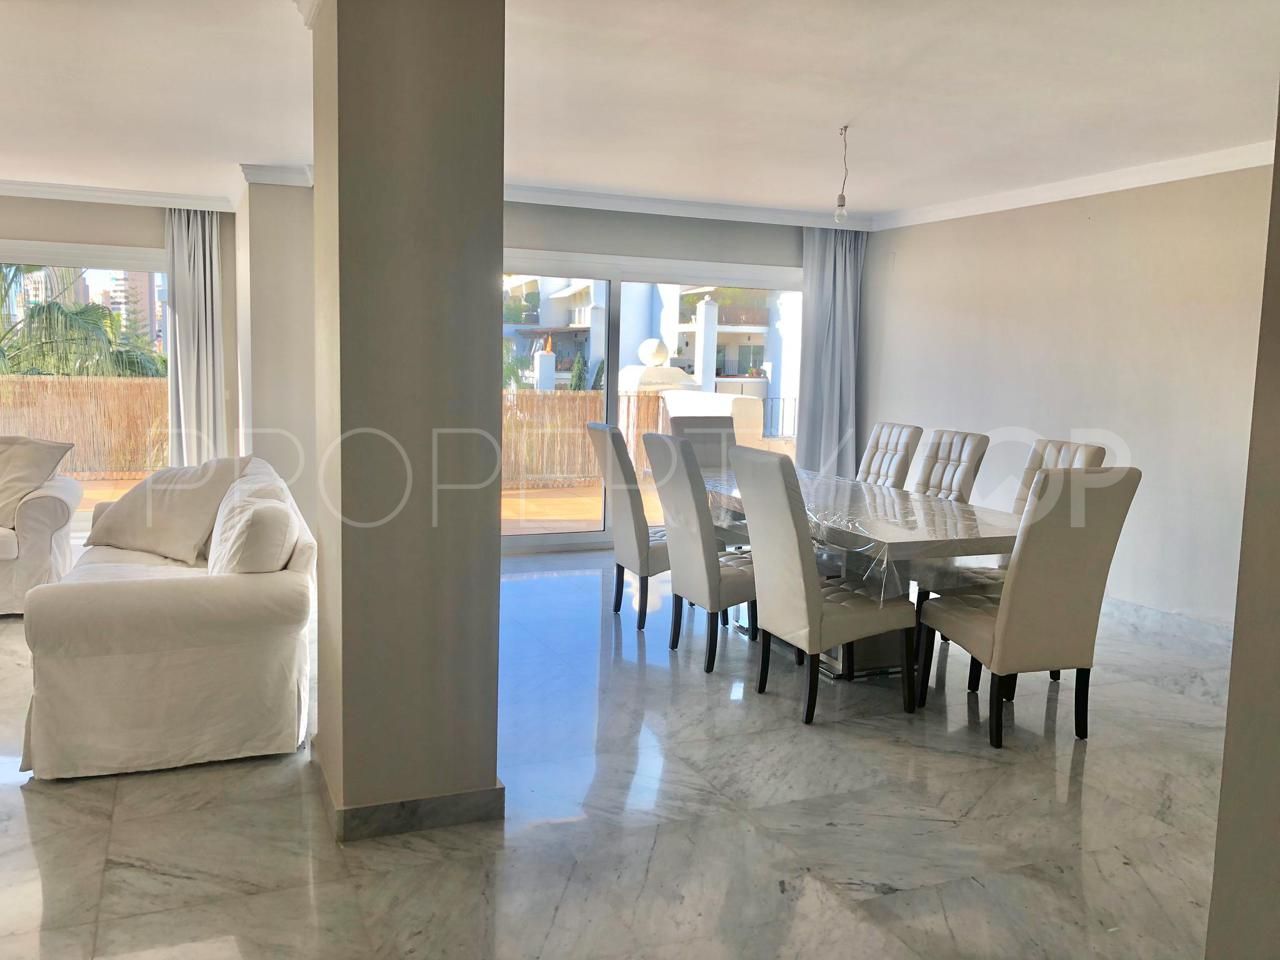 For sale flat with 4 bedrooms in Torremolinos